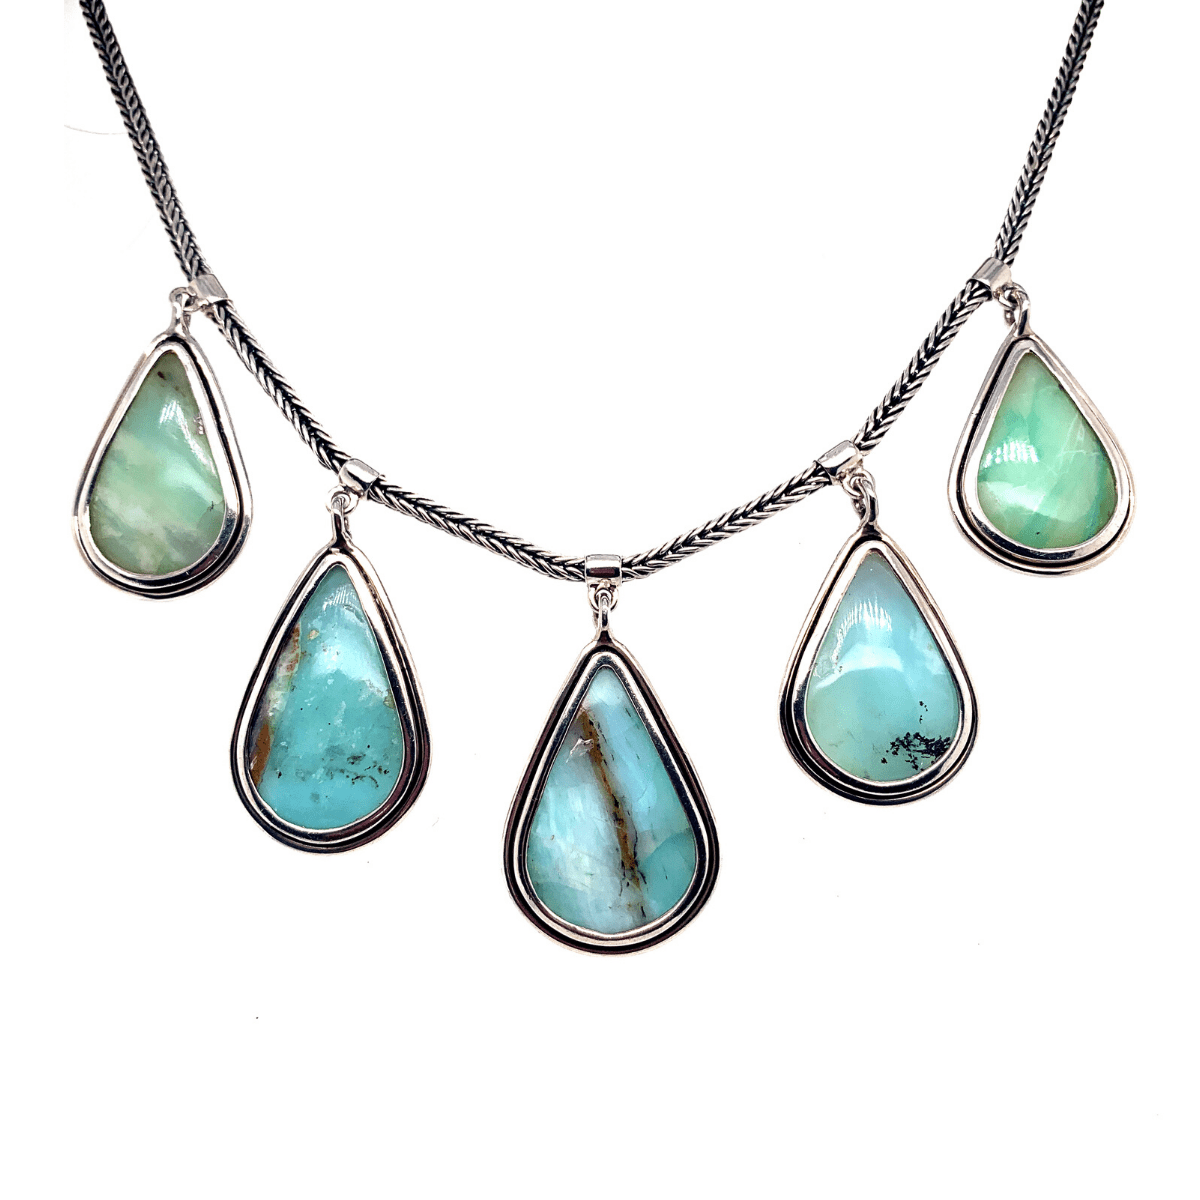 Peruvian Blue Opal Teardrops & Sterling Silver Necklace - Qinti - The Peruvian Shop